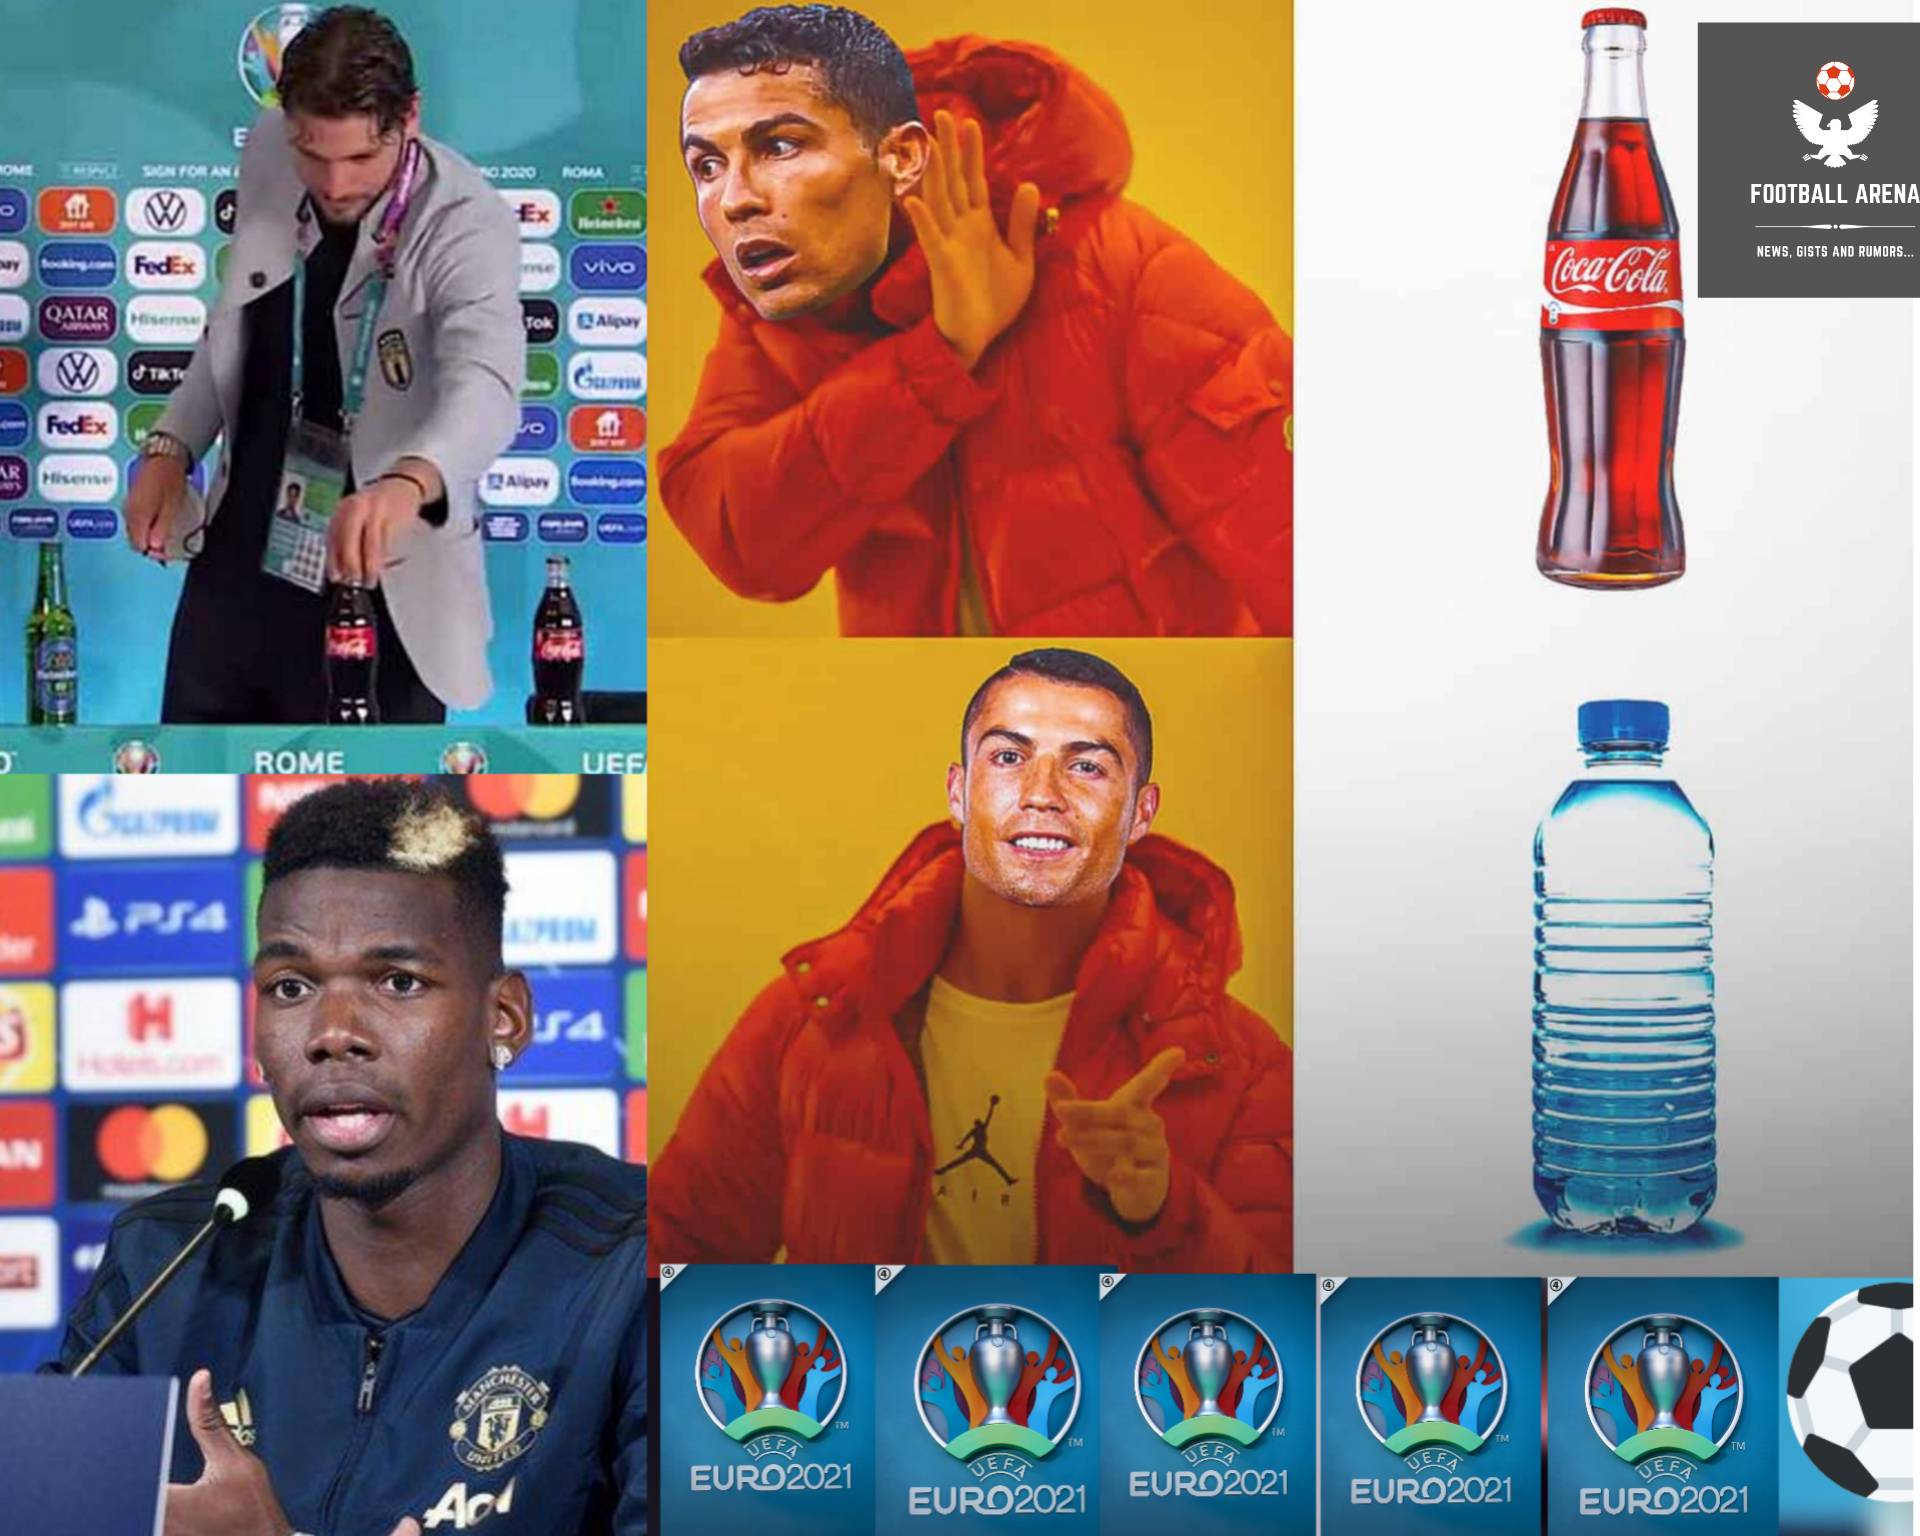 Ronaldo and coca cola